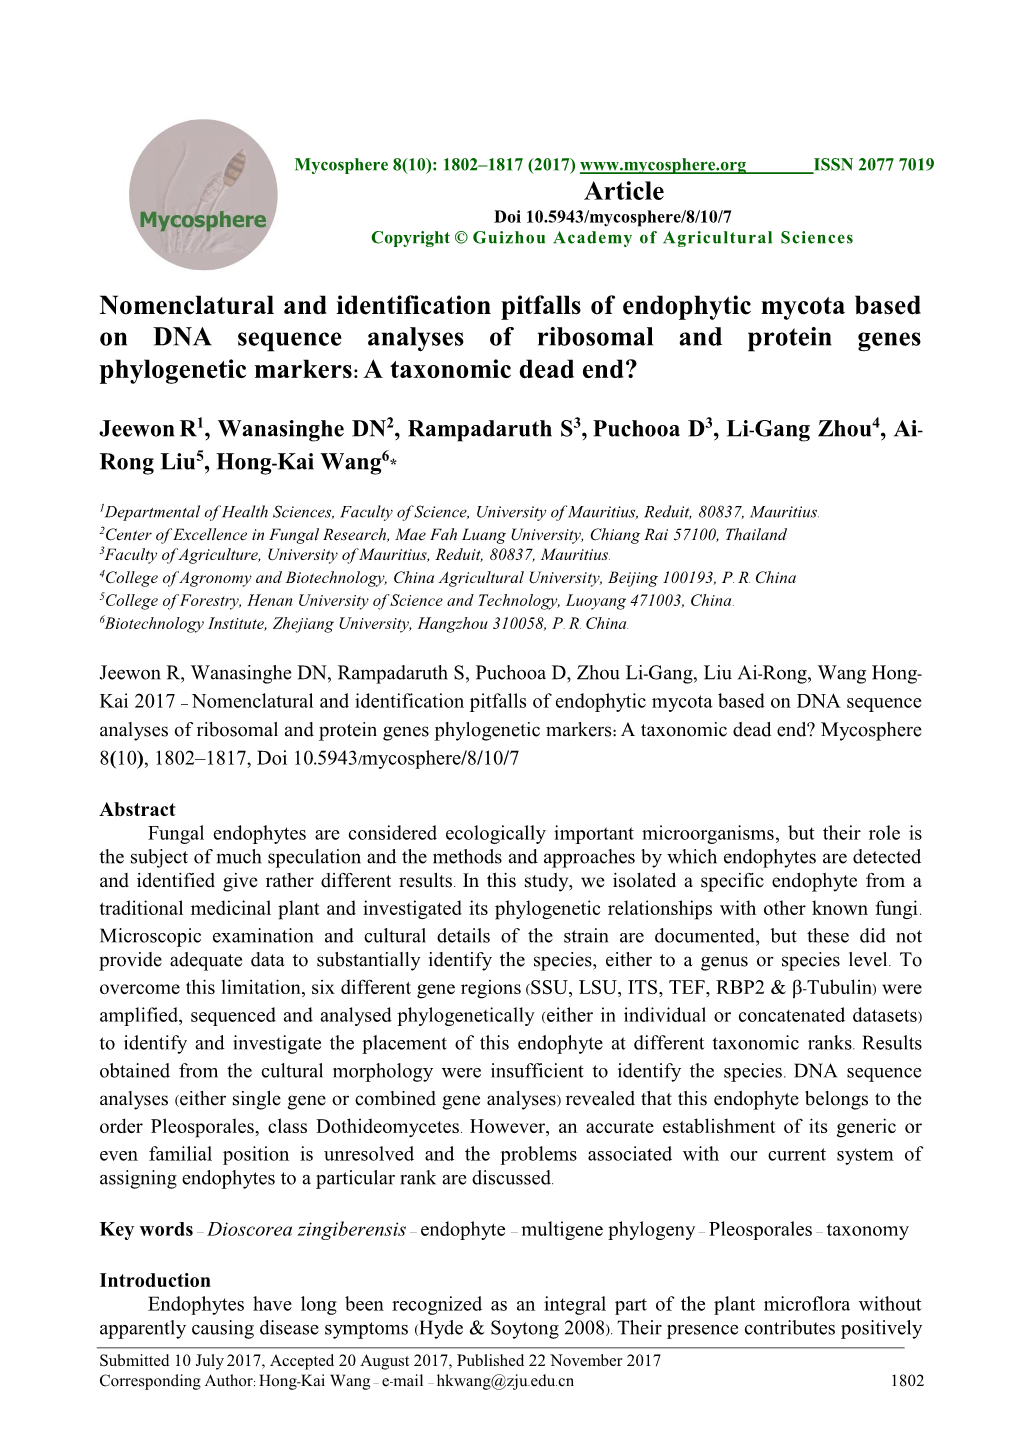 Nomenclatural and Identification Pitfalls of Endophytic Mycota Based